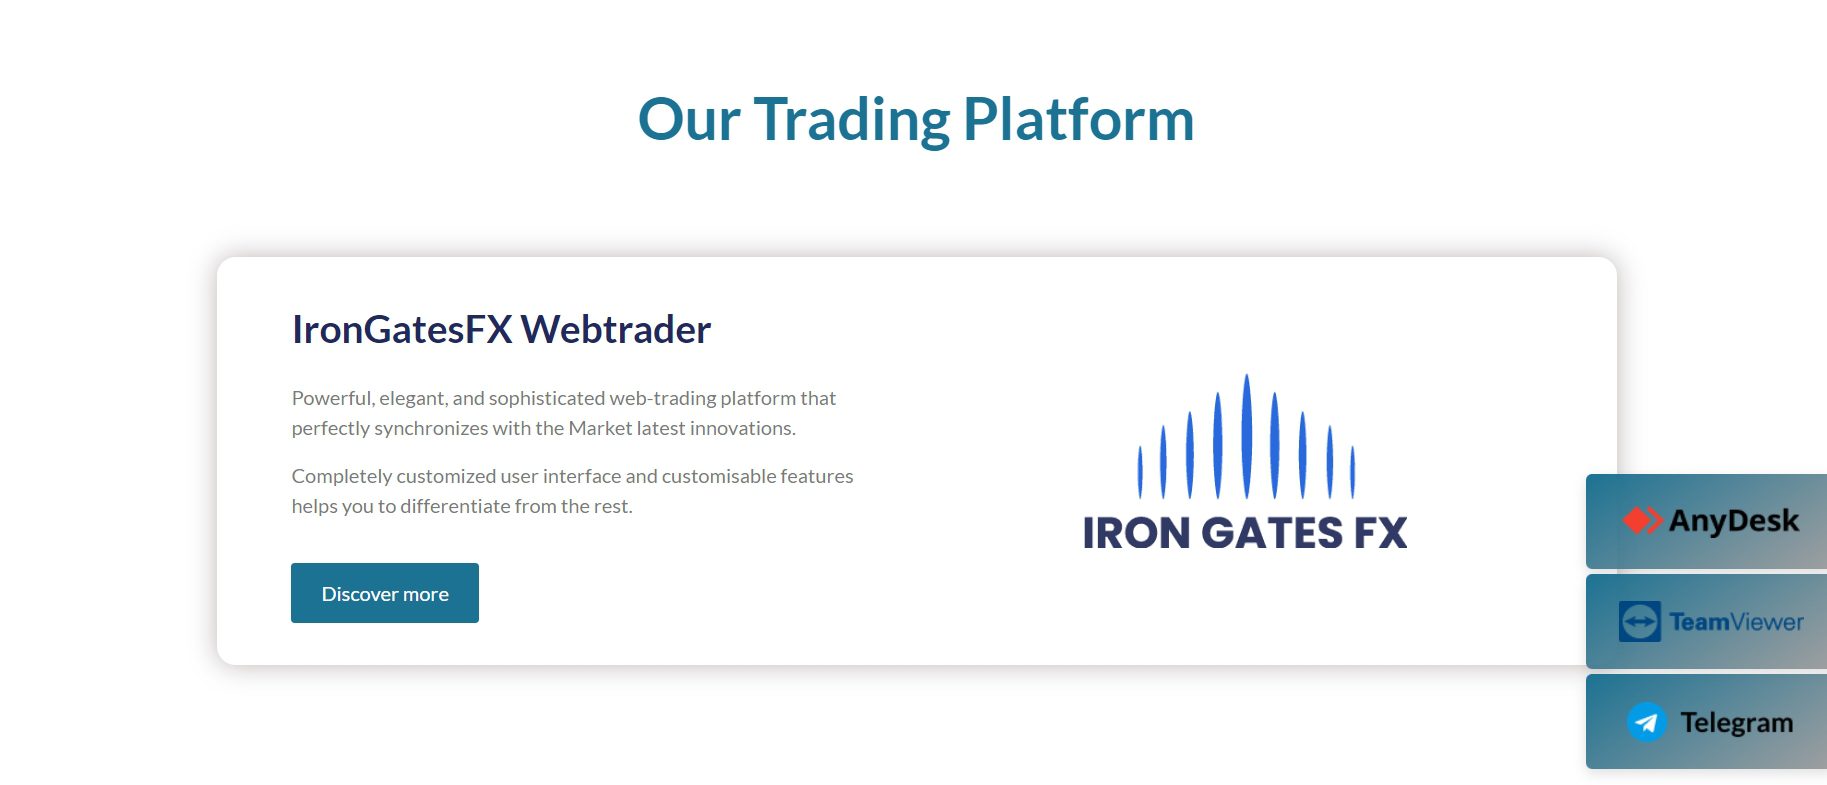 IronGatesFX website